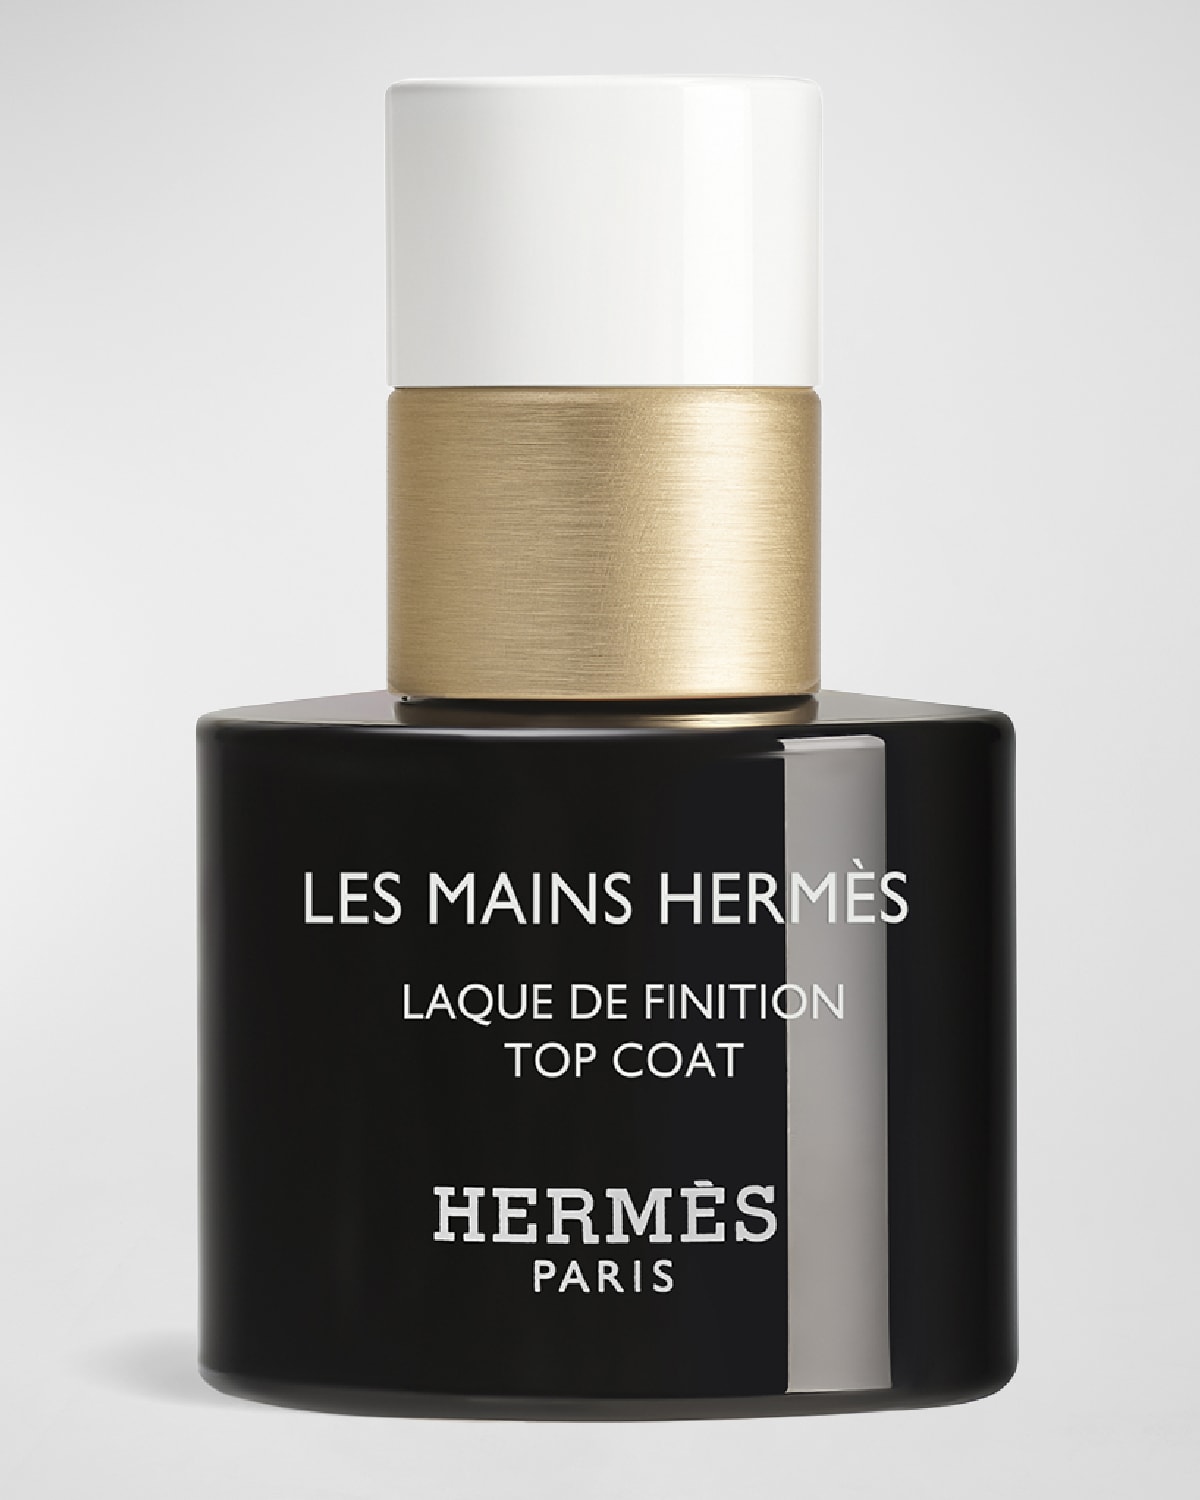 Les Mains Hermes Top Coat